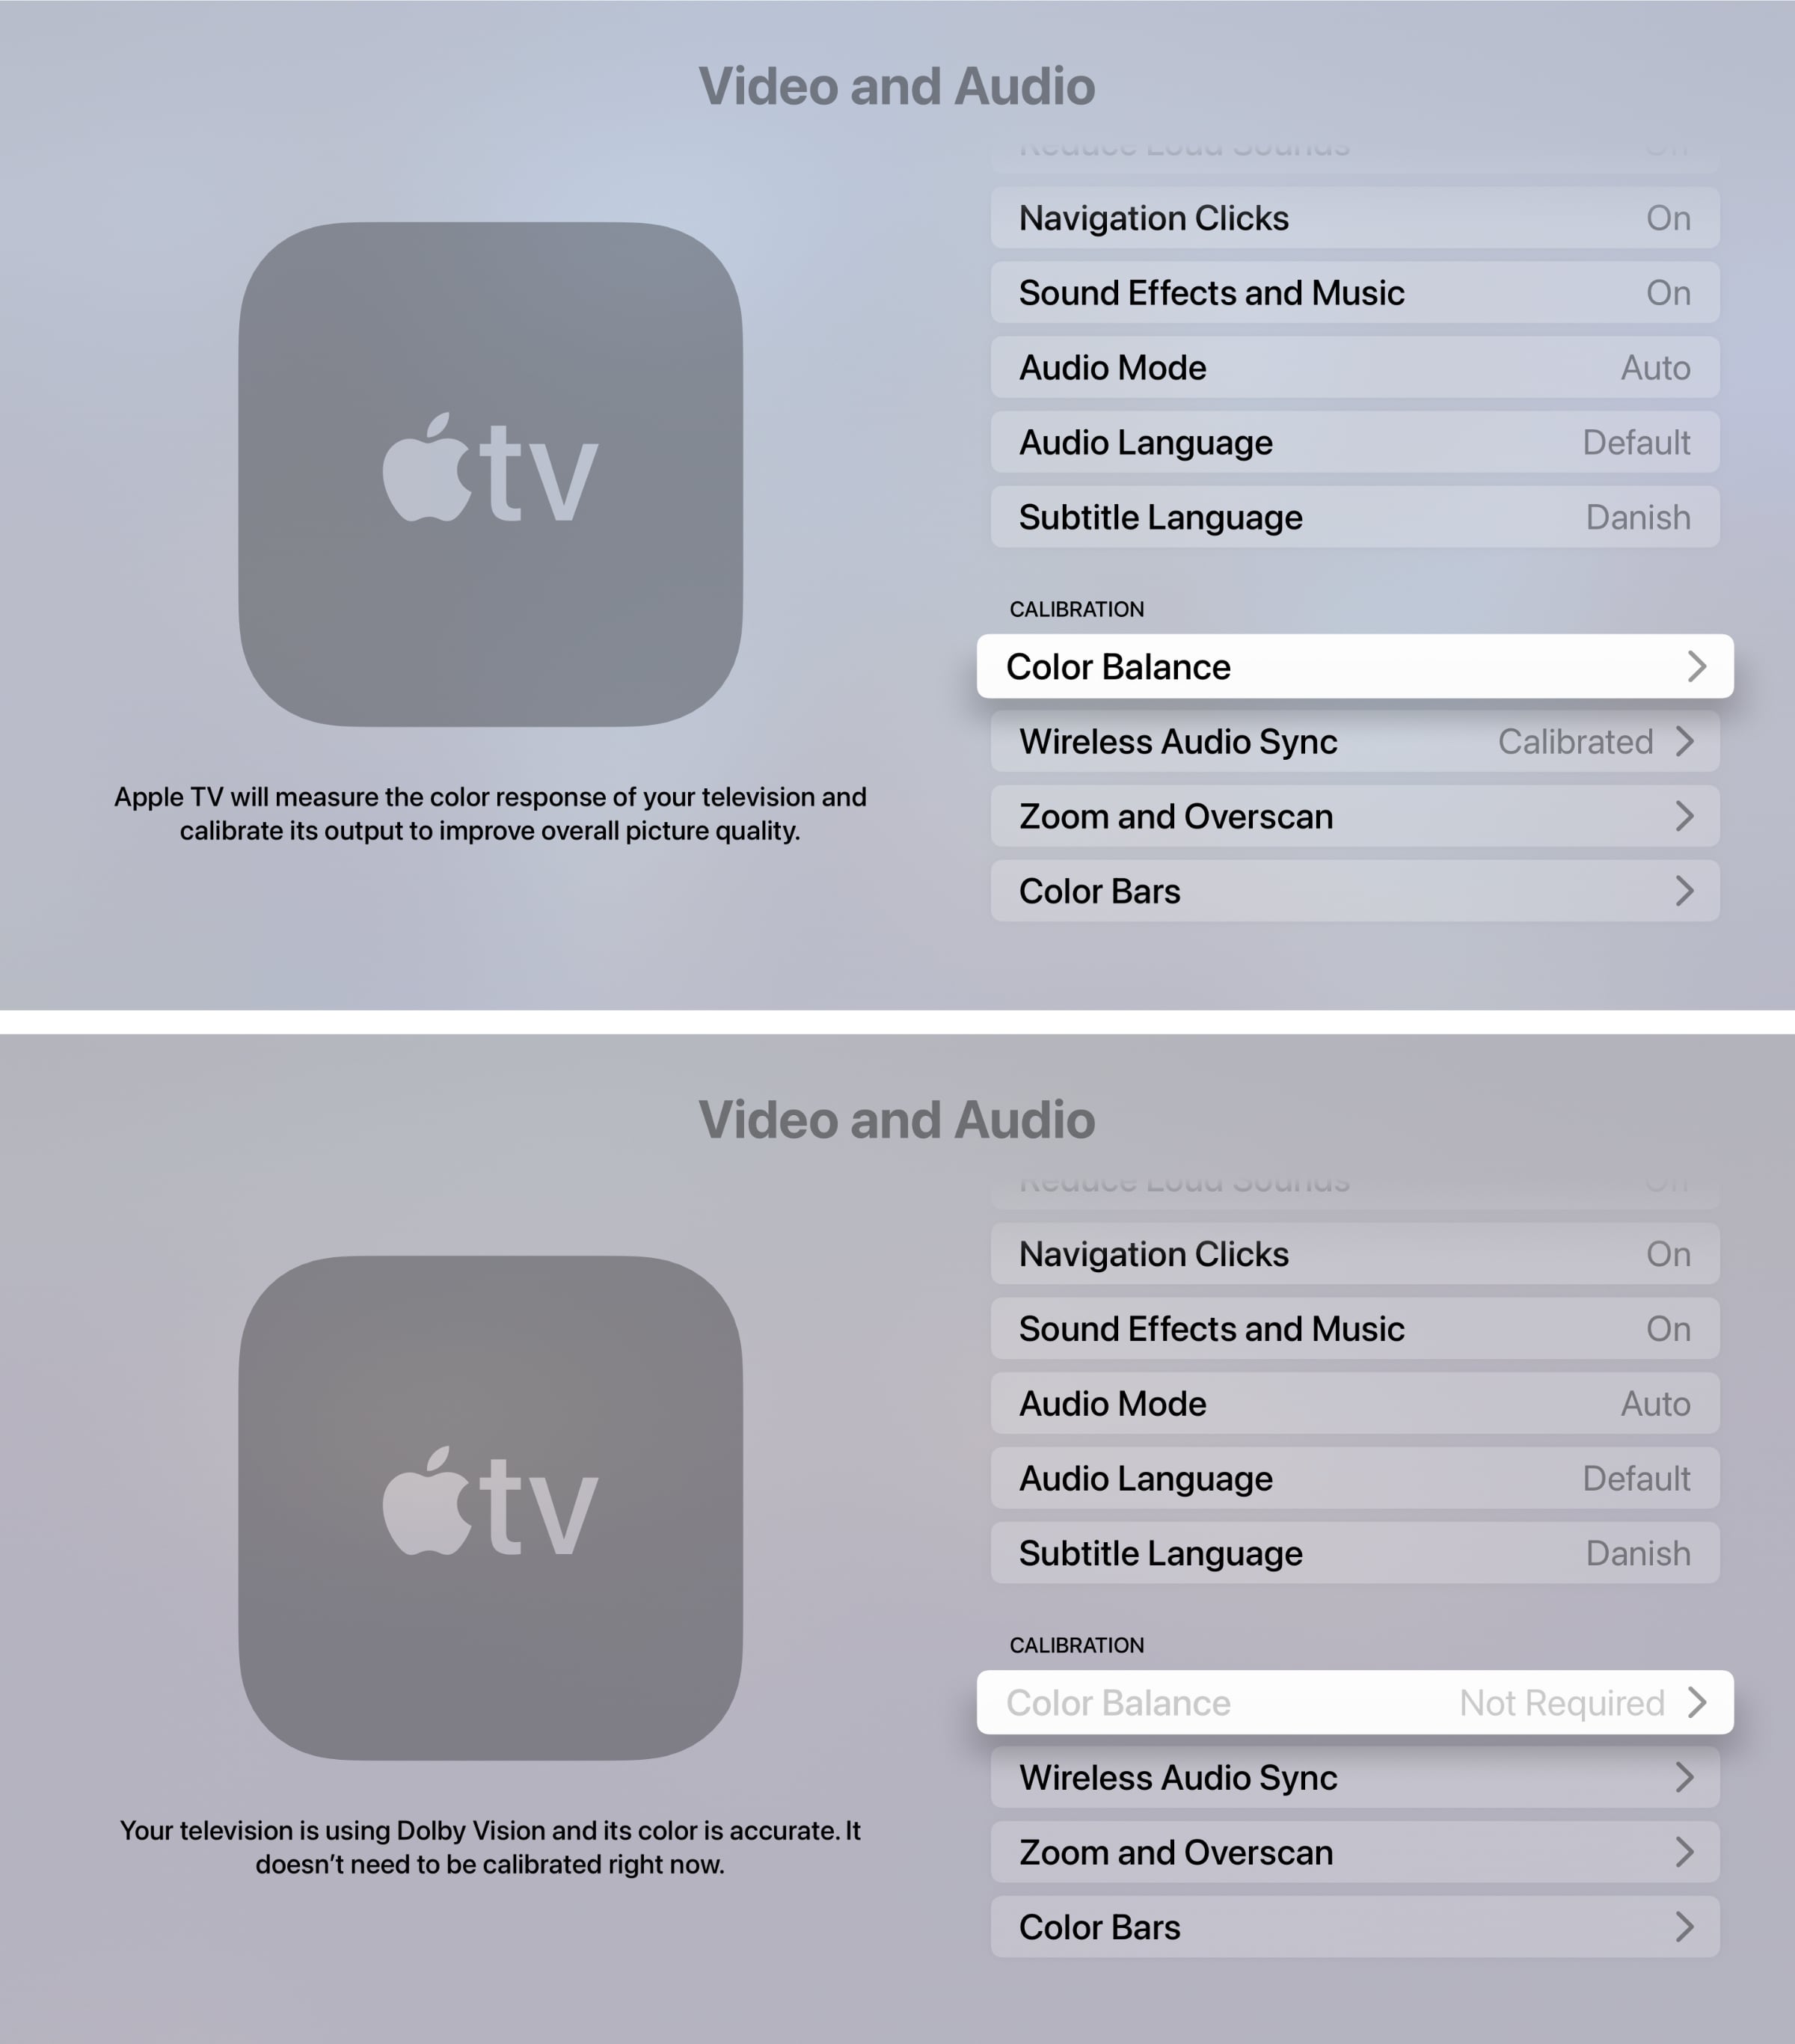 letvægt Arkitektur kor Apple's 'Color Balance' calibration is also coming to previous Apple TVs -  FlatpanelsHD